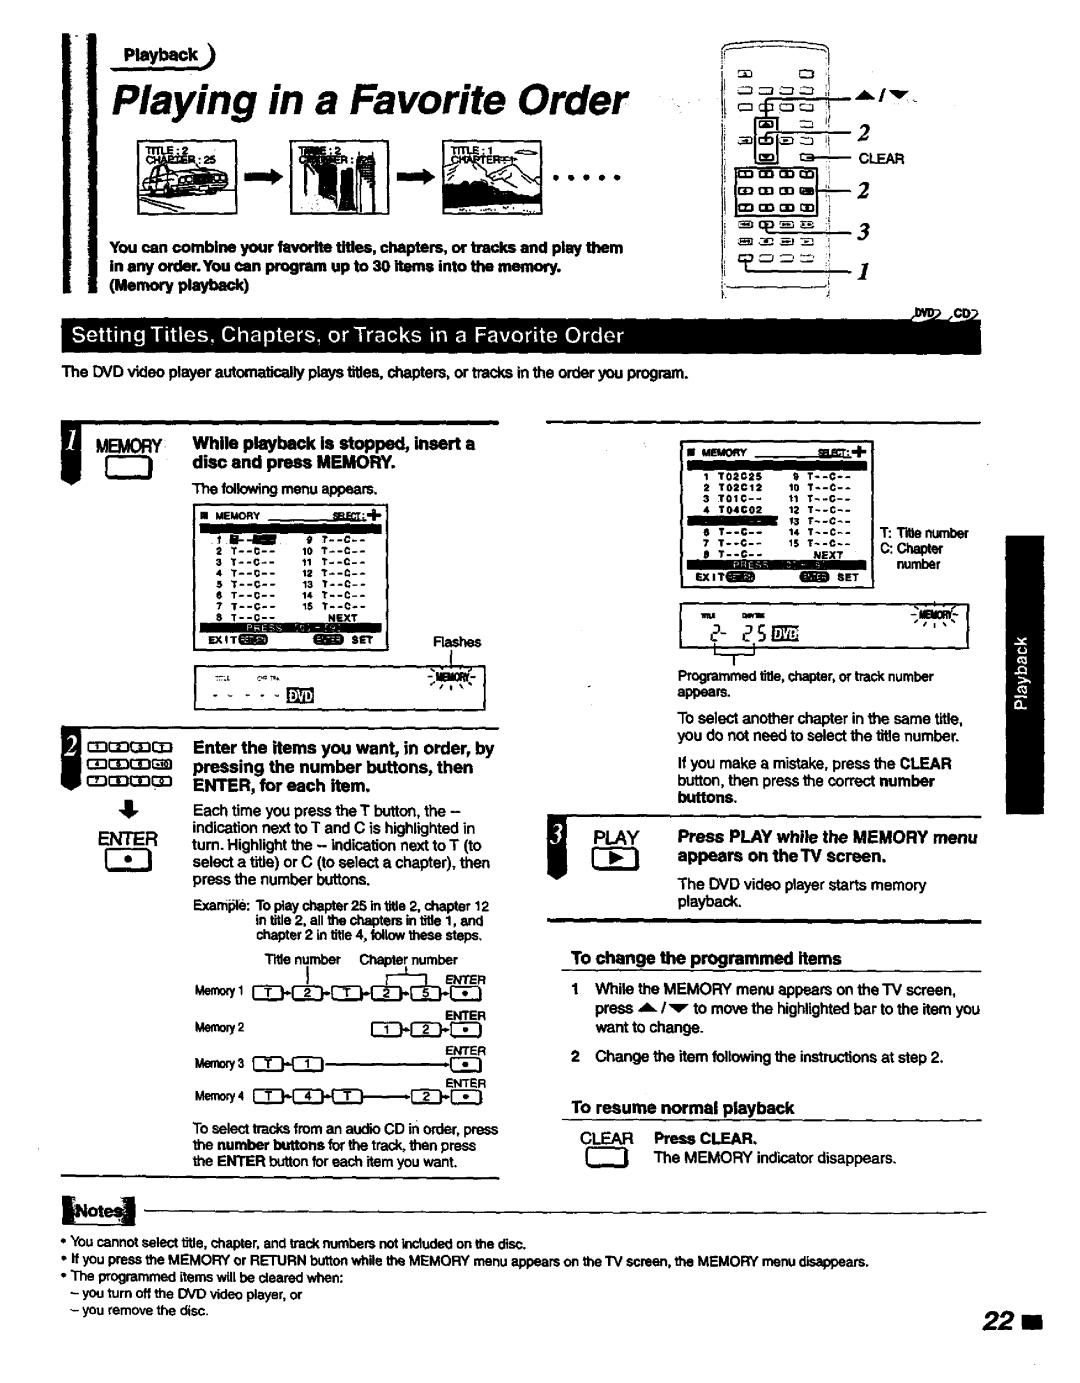 Magnavox DVD400AT manual Playing in a Favorite Order, Memoryplayback, IZ3-OD-t 